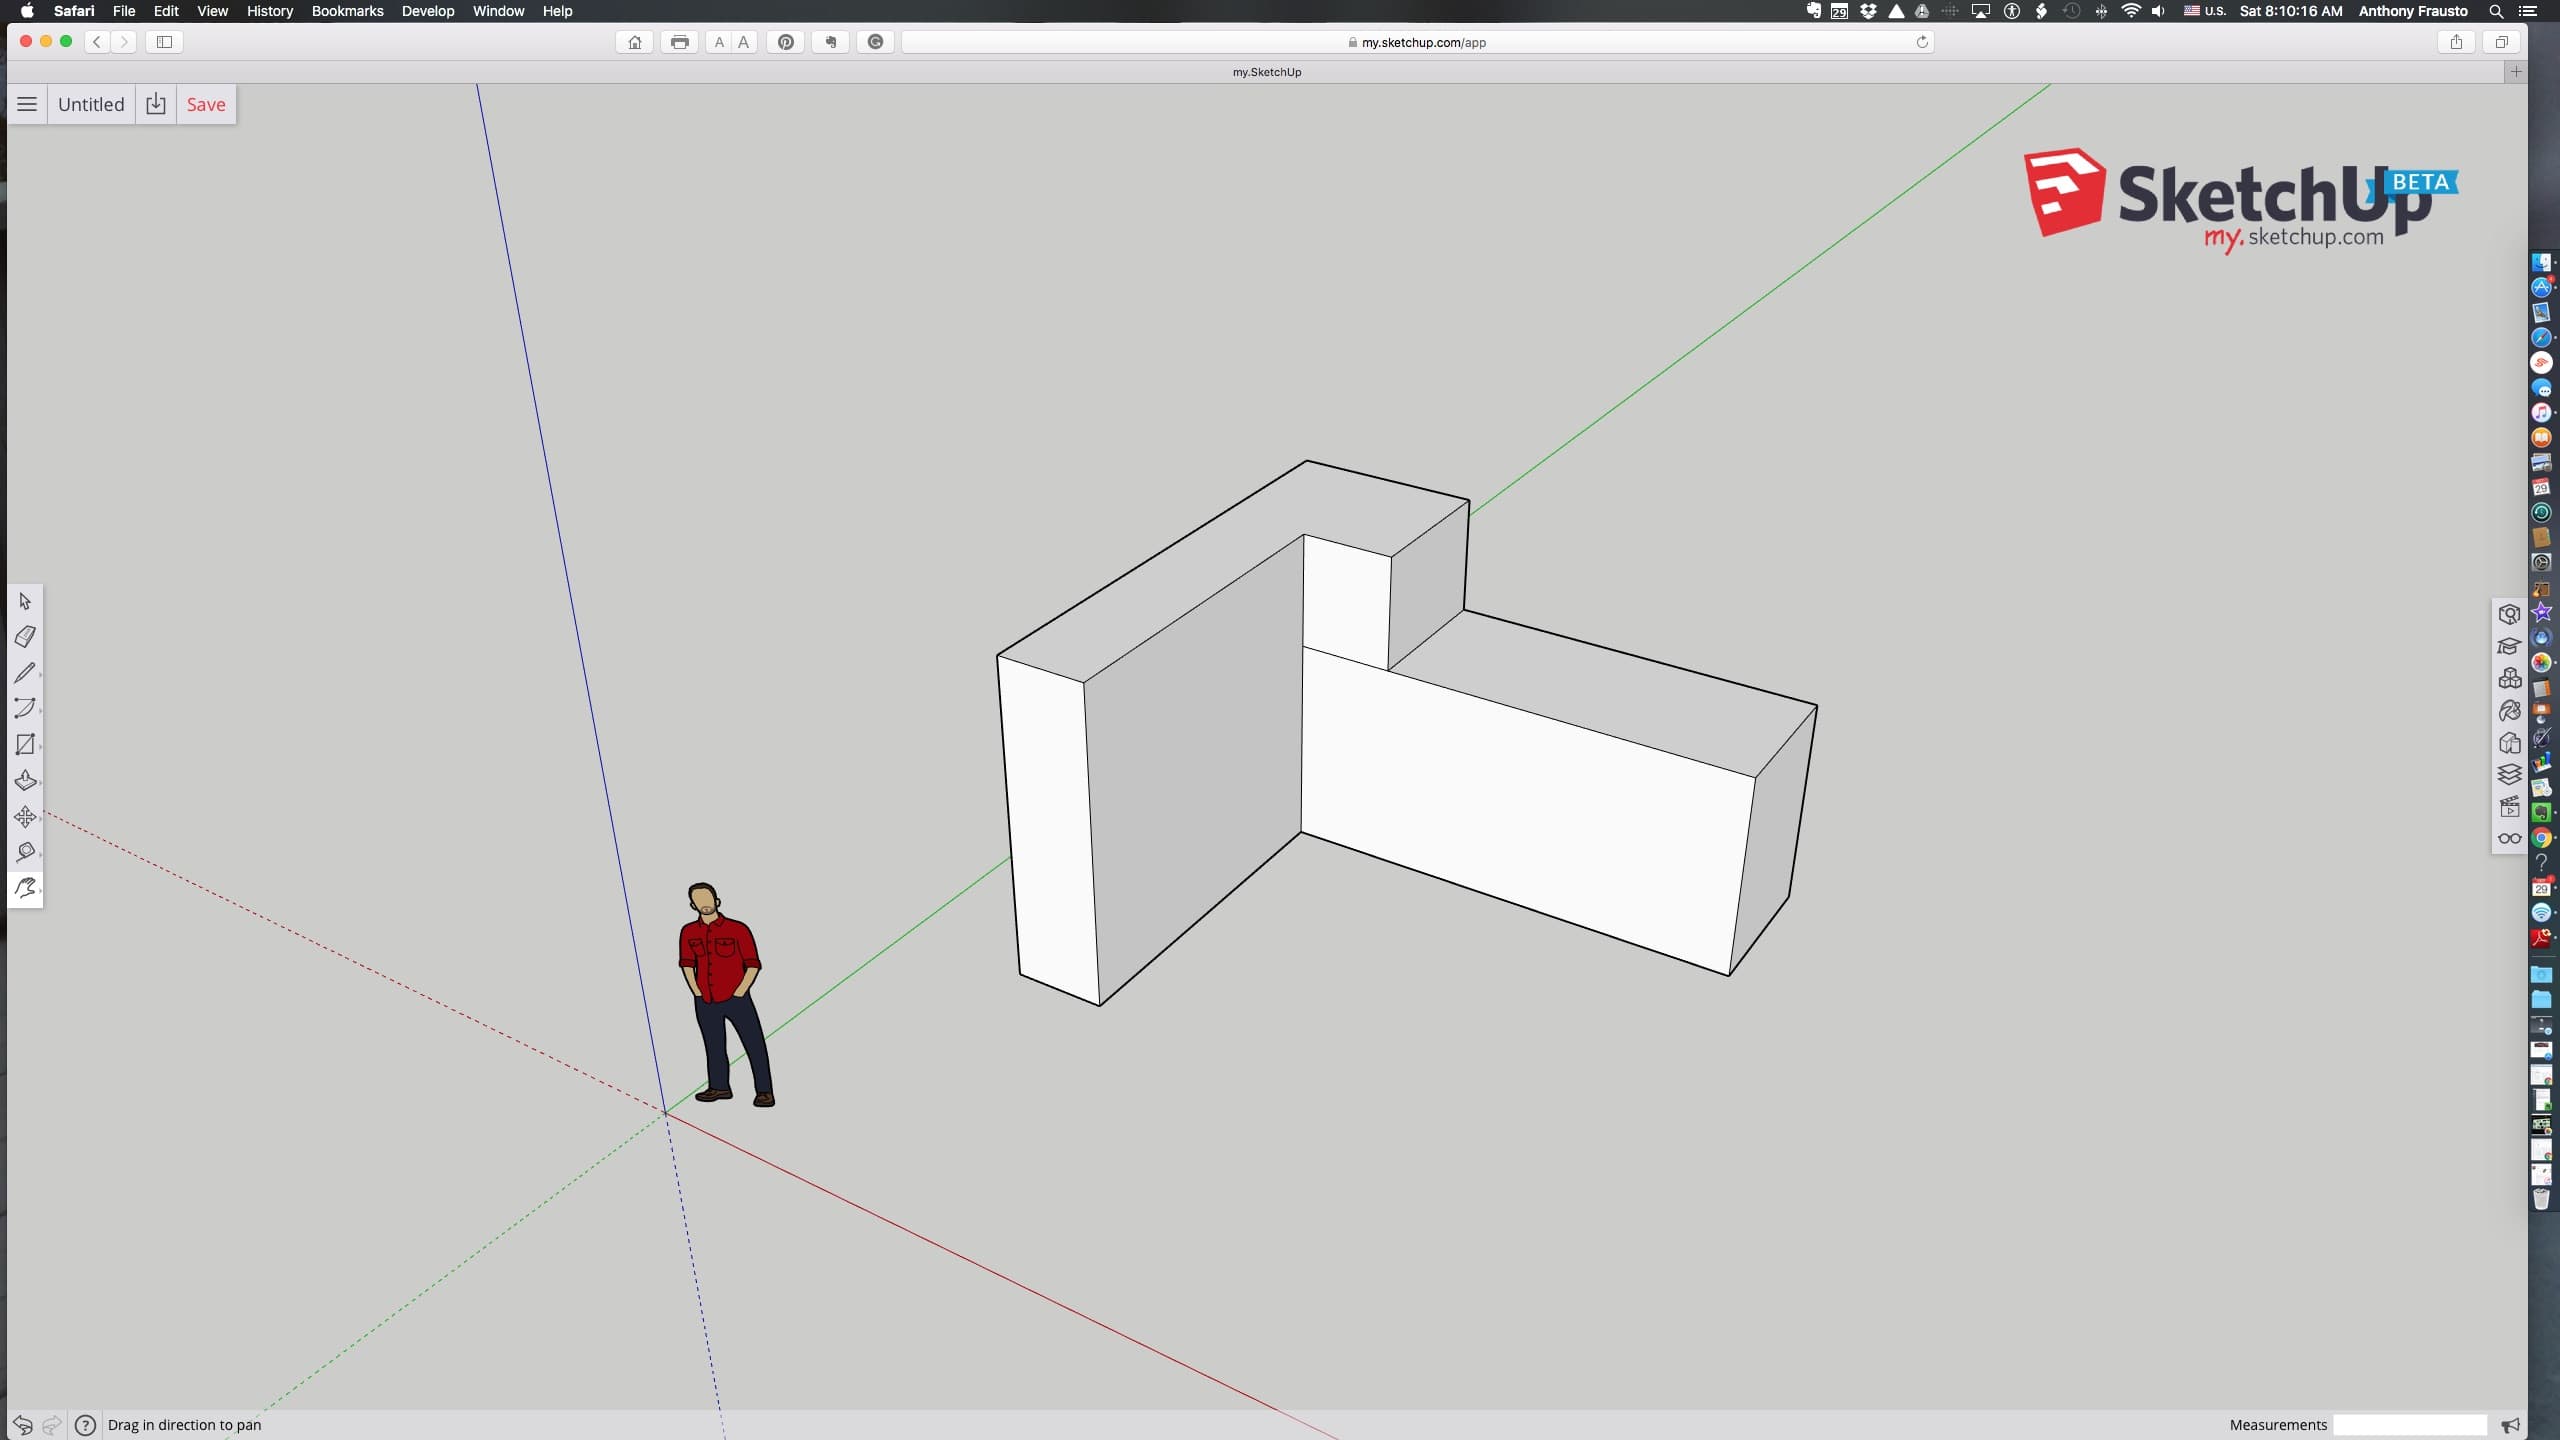 Sketchup - Free 3D modeling software